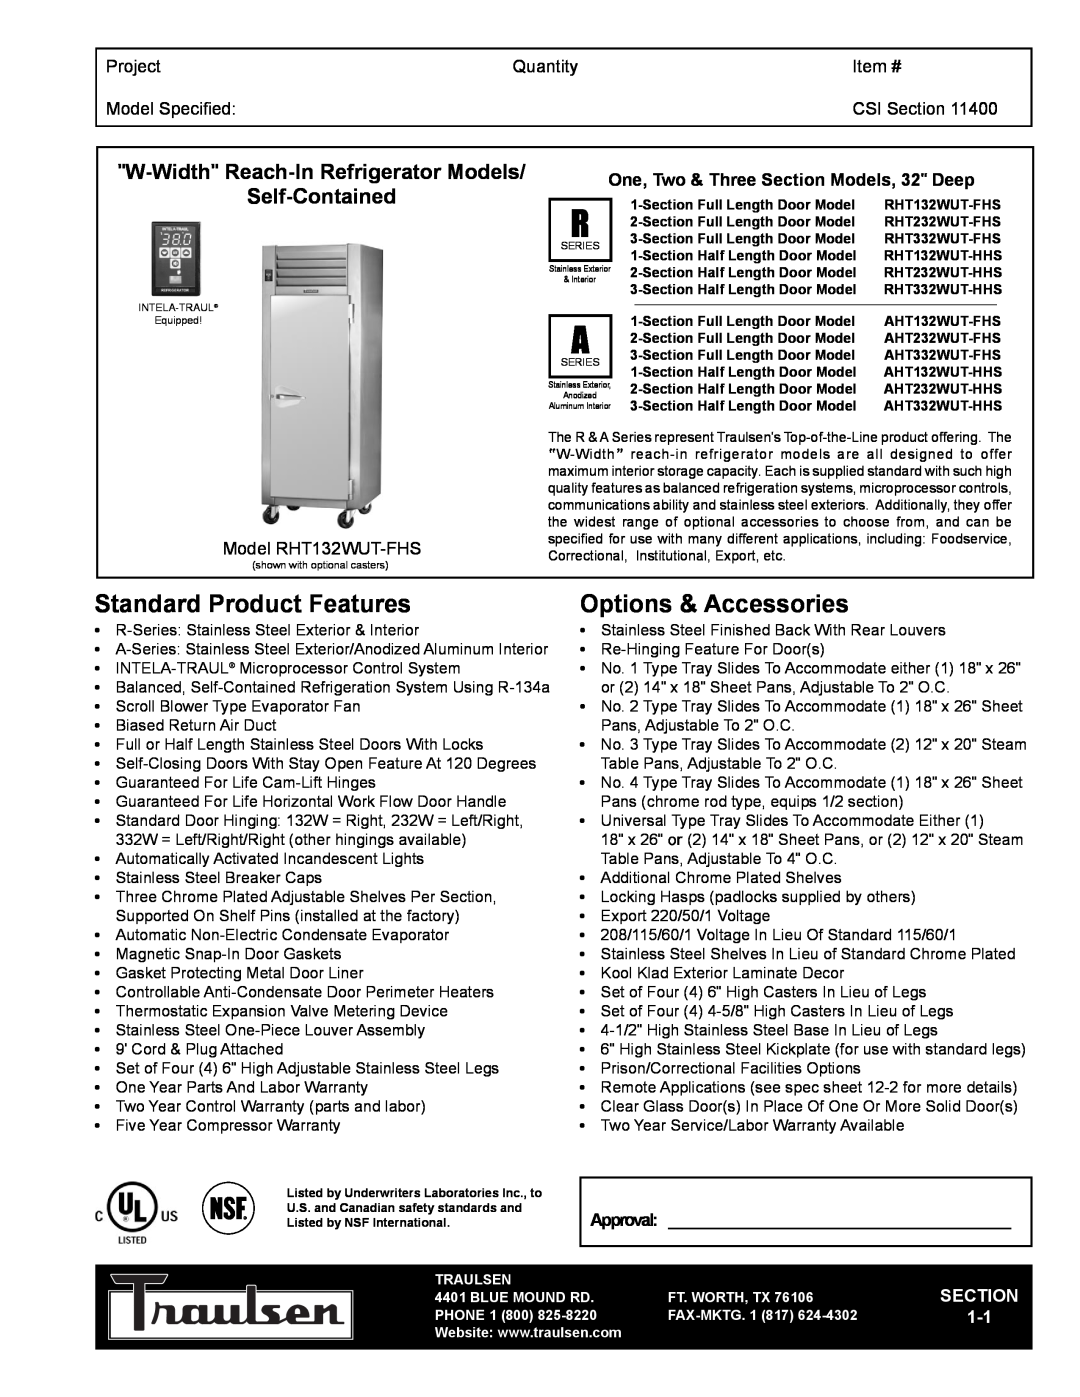 Traulsen TR35755 warranty W-Width Reach-InRefrigerator Models, Project, Quantity, Item #, Model Specified, CSI Section 